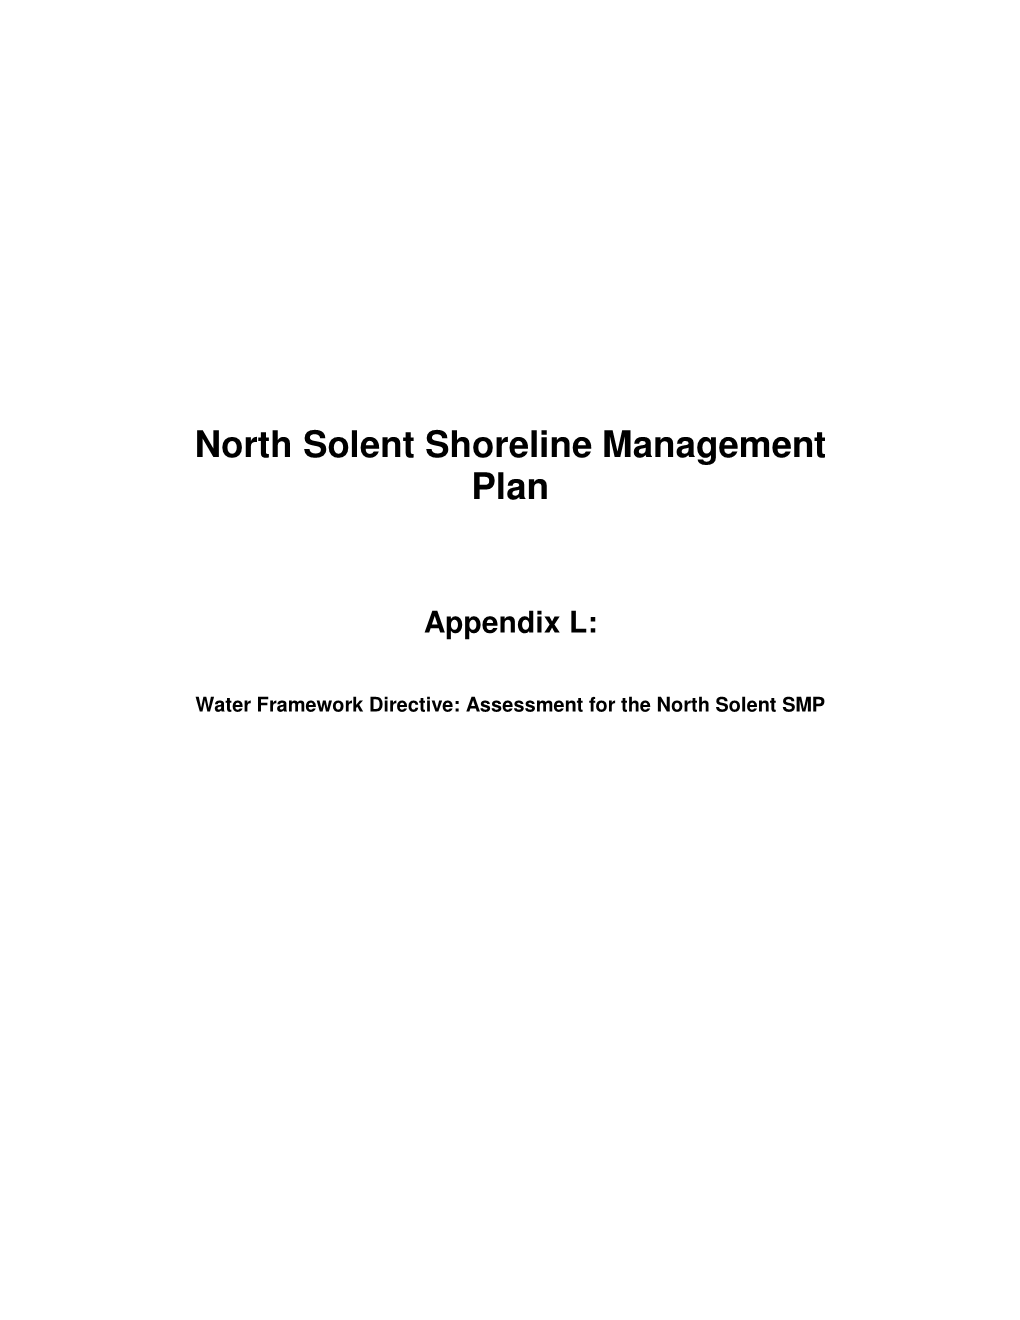 Appendix L Water Framework Directive Assessment